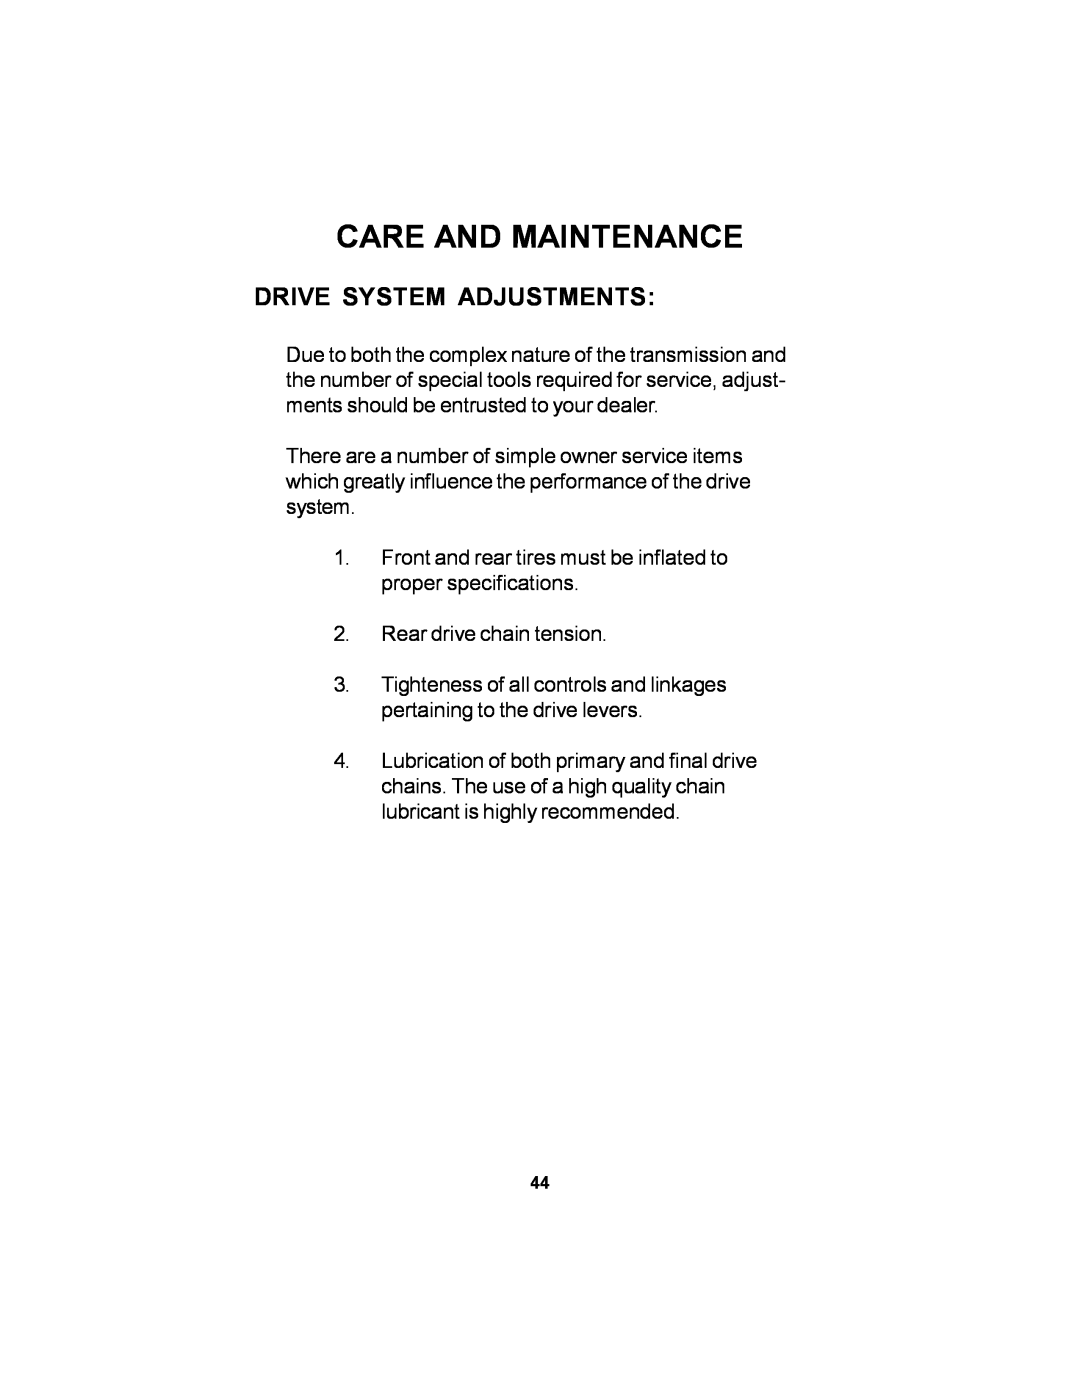 Dixon 14295-1005 manual Drive System Adjustments, Care And Maintenance 